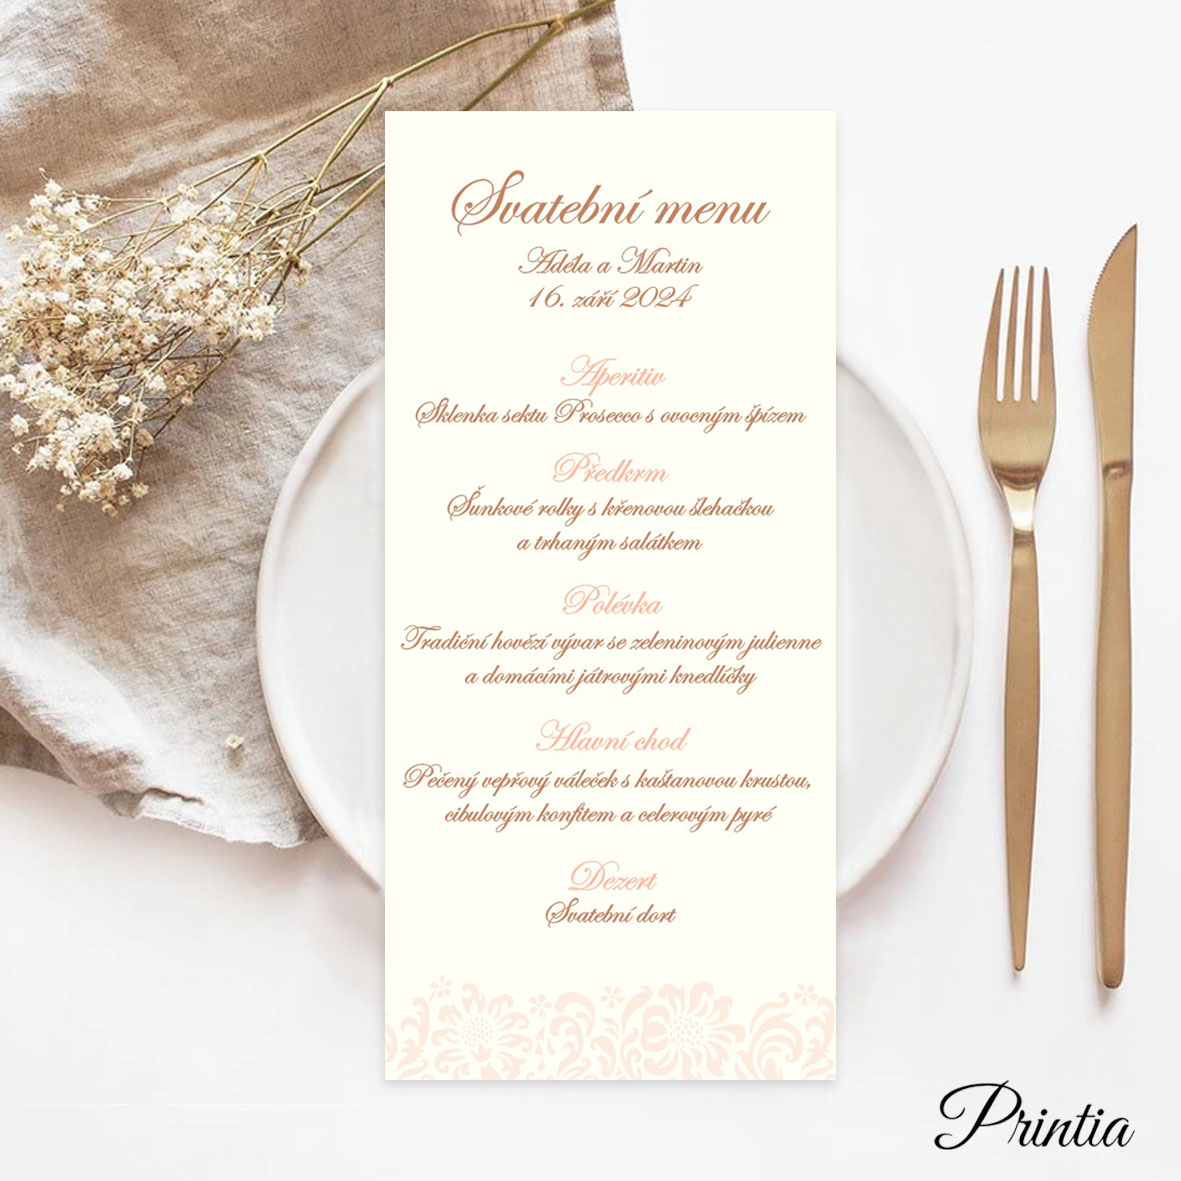 Wedding menu with apricot ornament